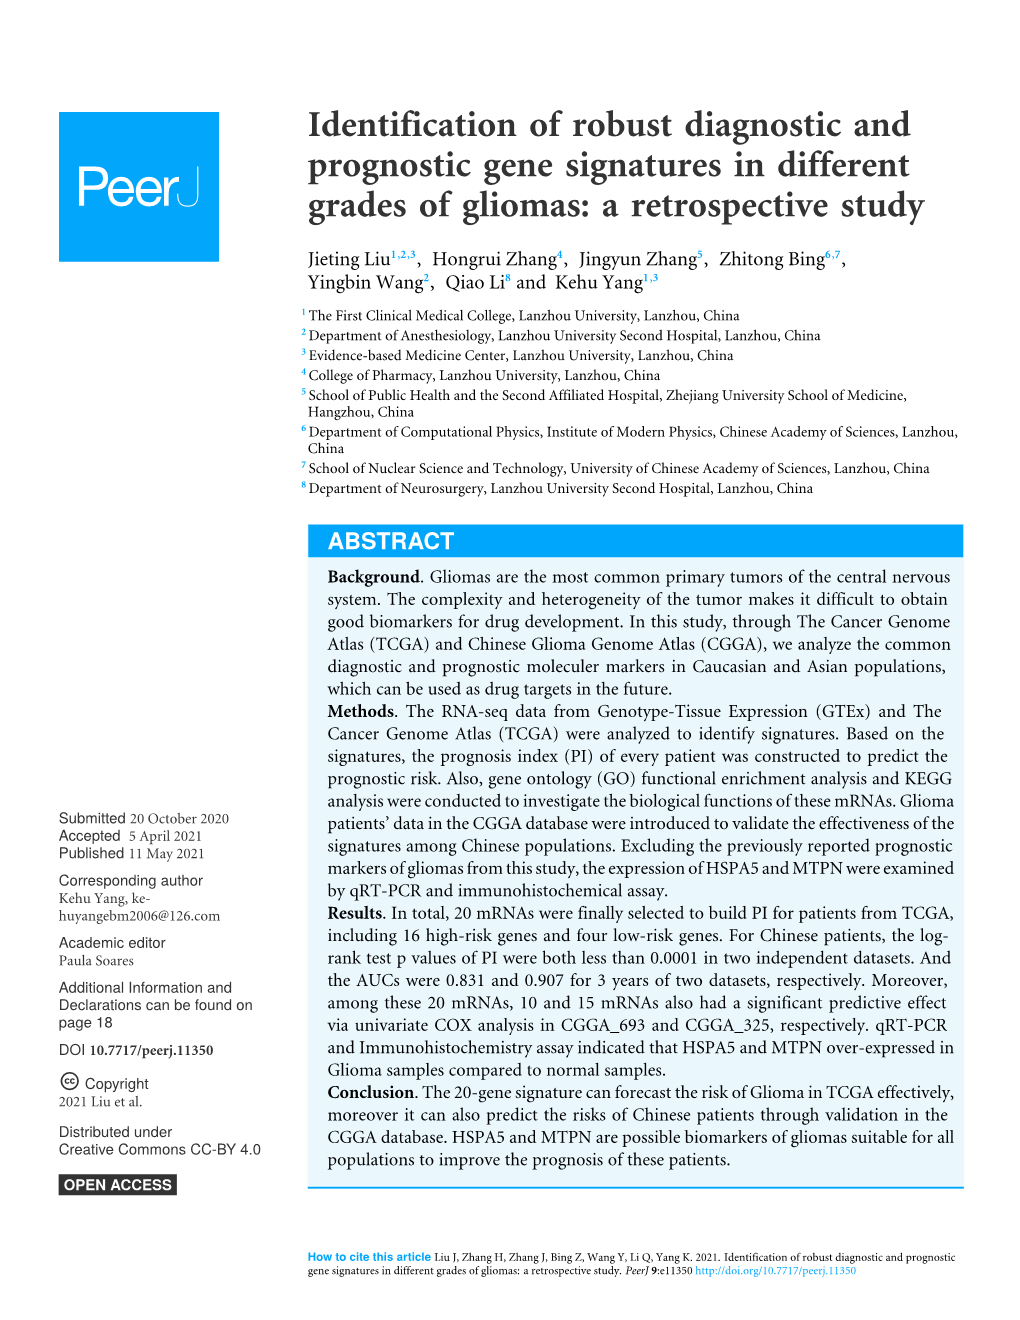 Identification of Robust Diagnostic and Prognostic Gene Signatures in Different Grades of Gliomas: a Retrospective Study